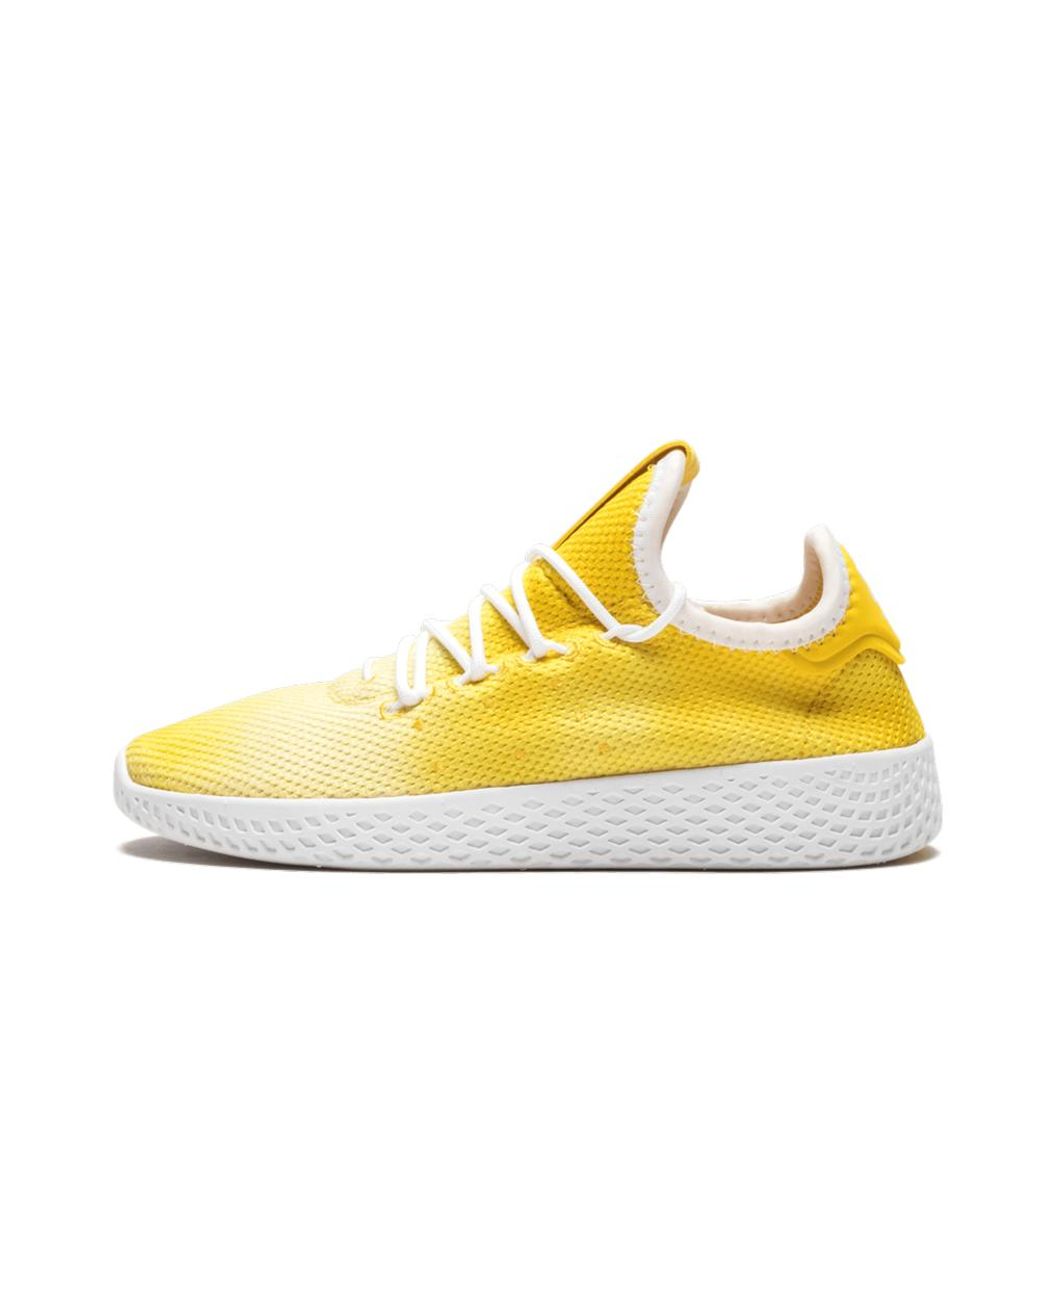 adidas originals pw tennis hu yellow